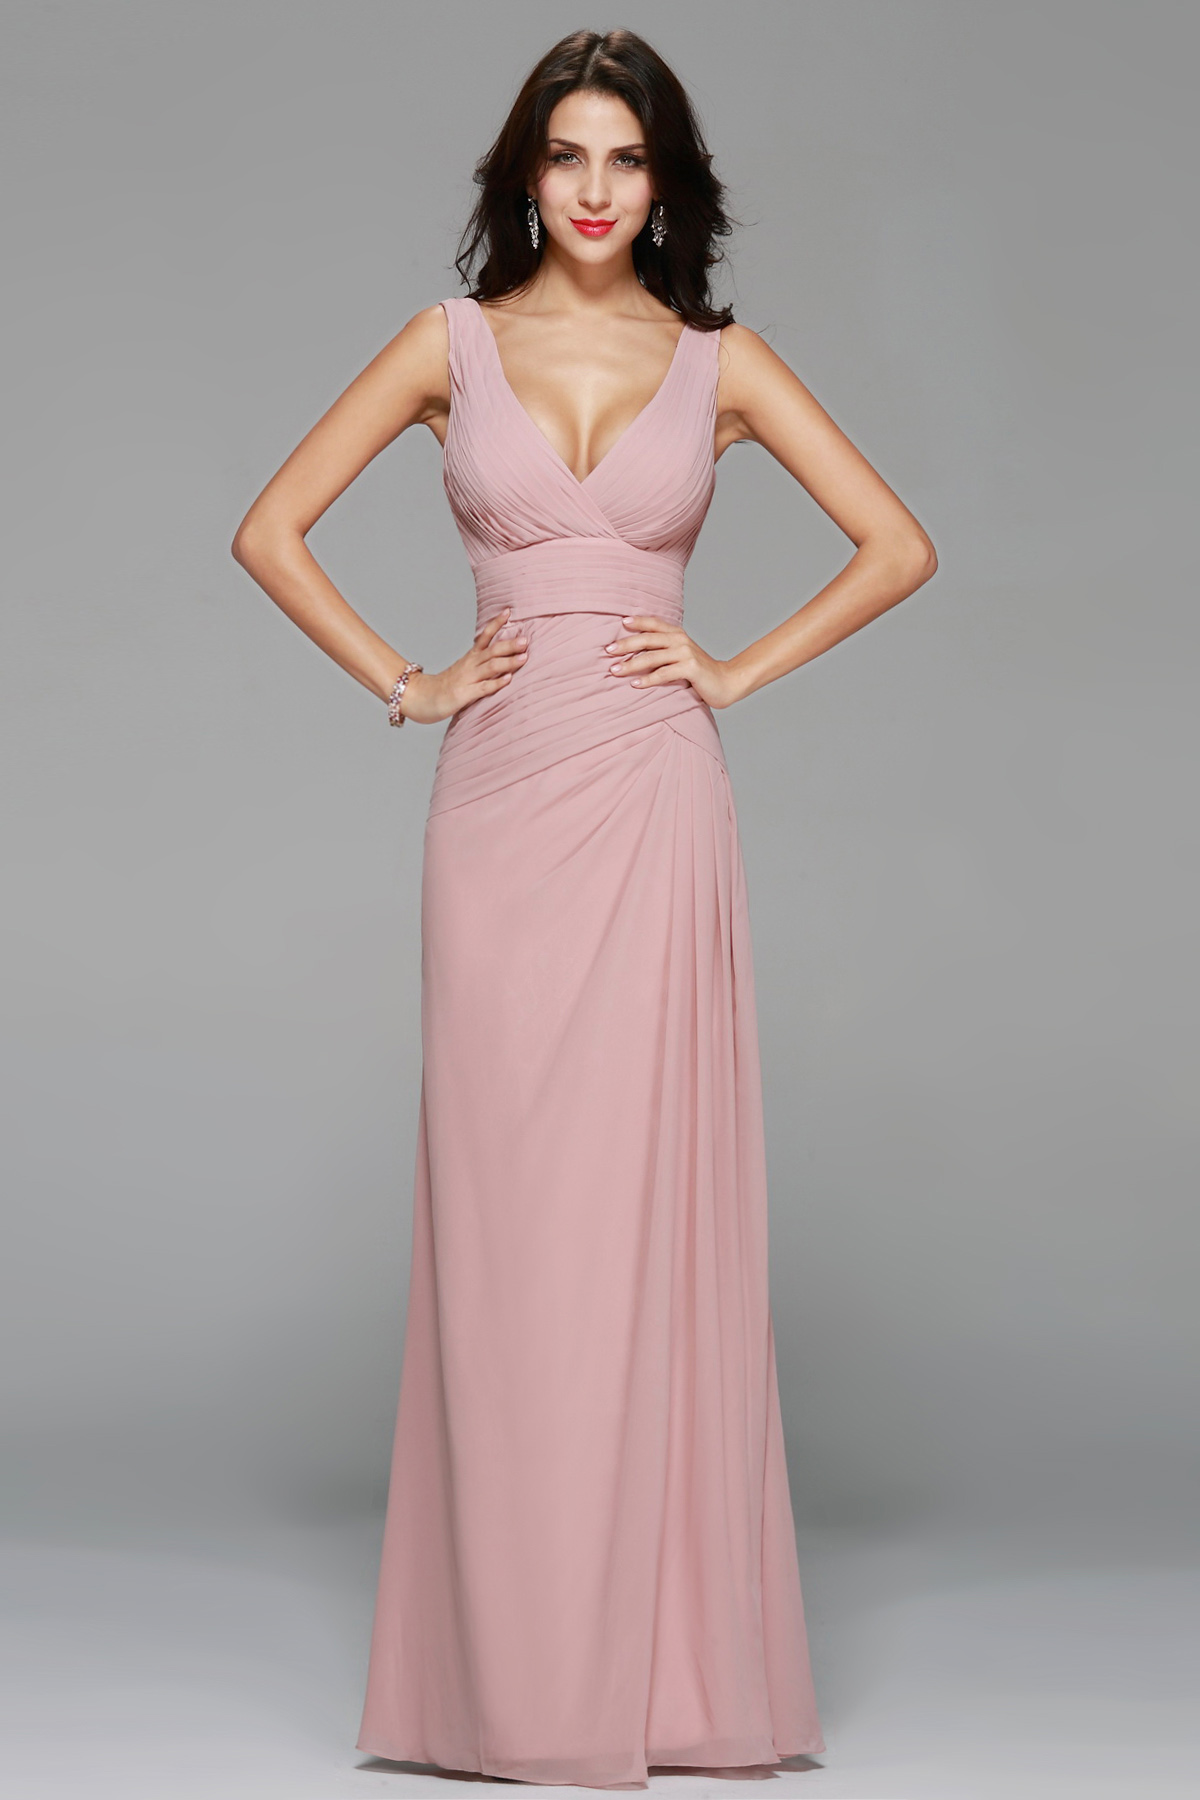 Sheath/Columnn V-neck Floor-length Chiffon Prom Dress